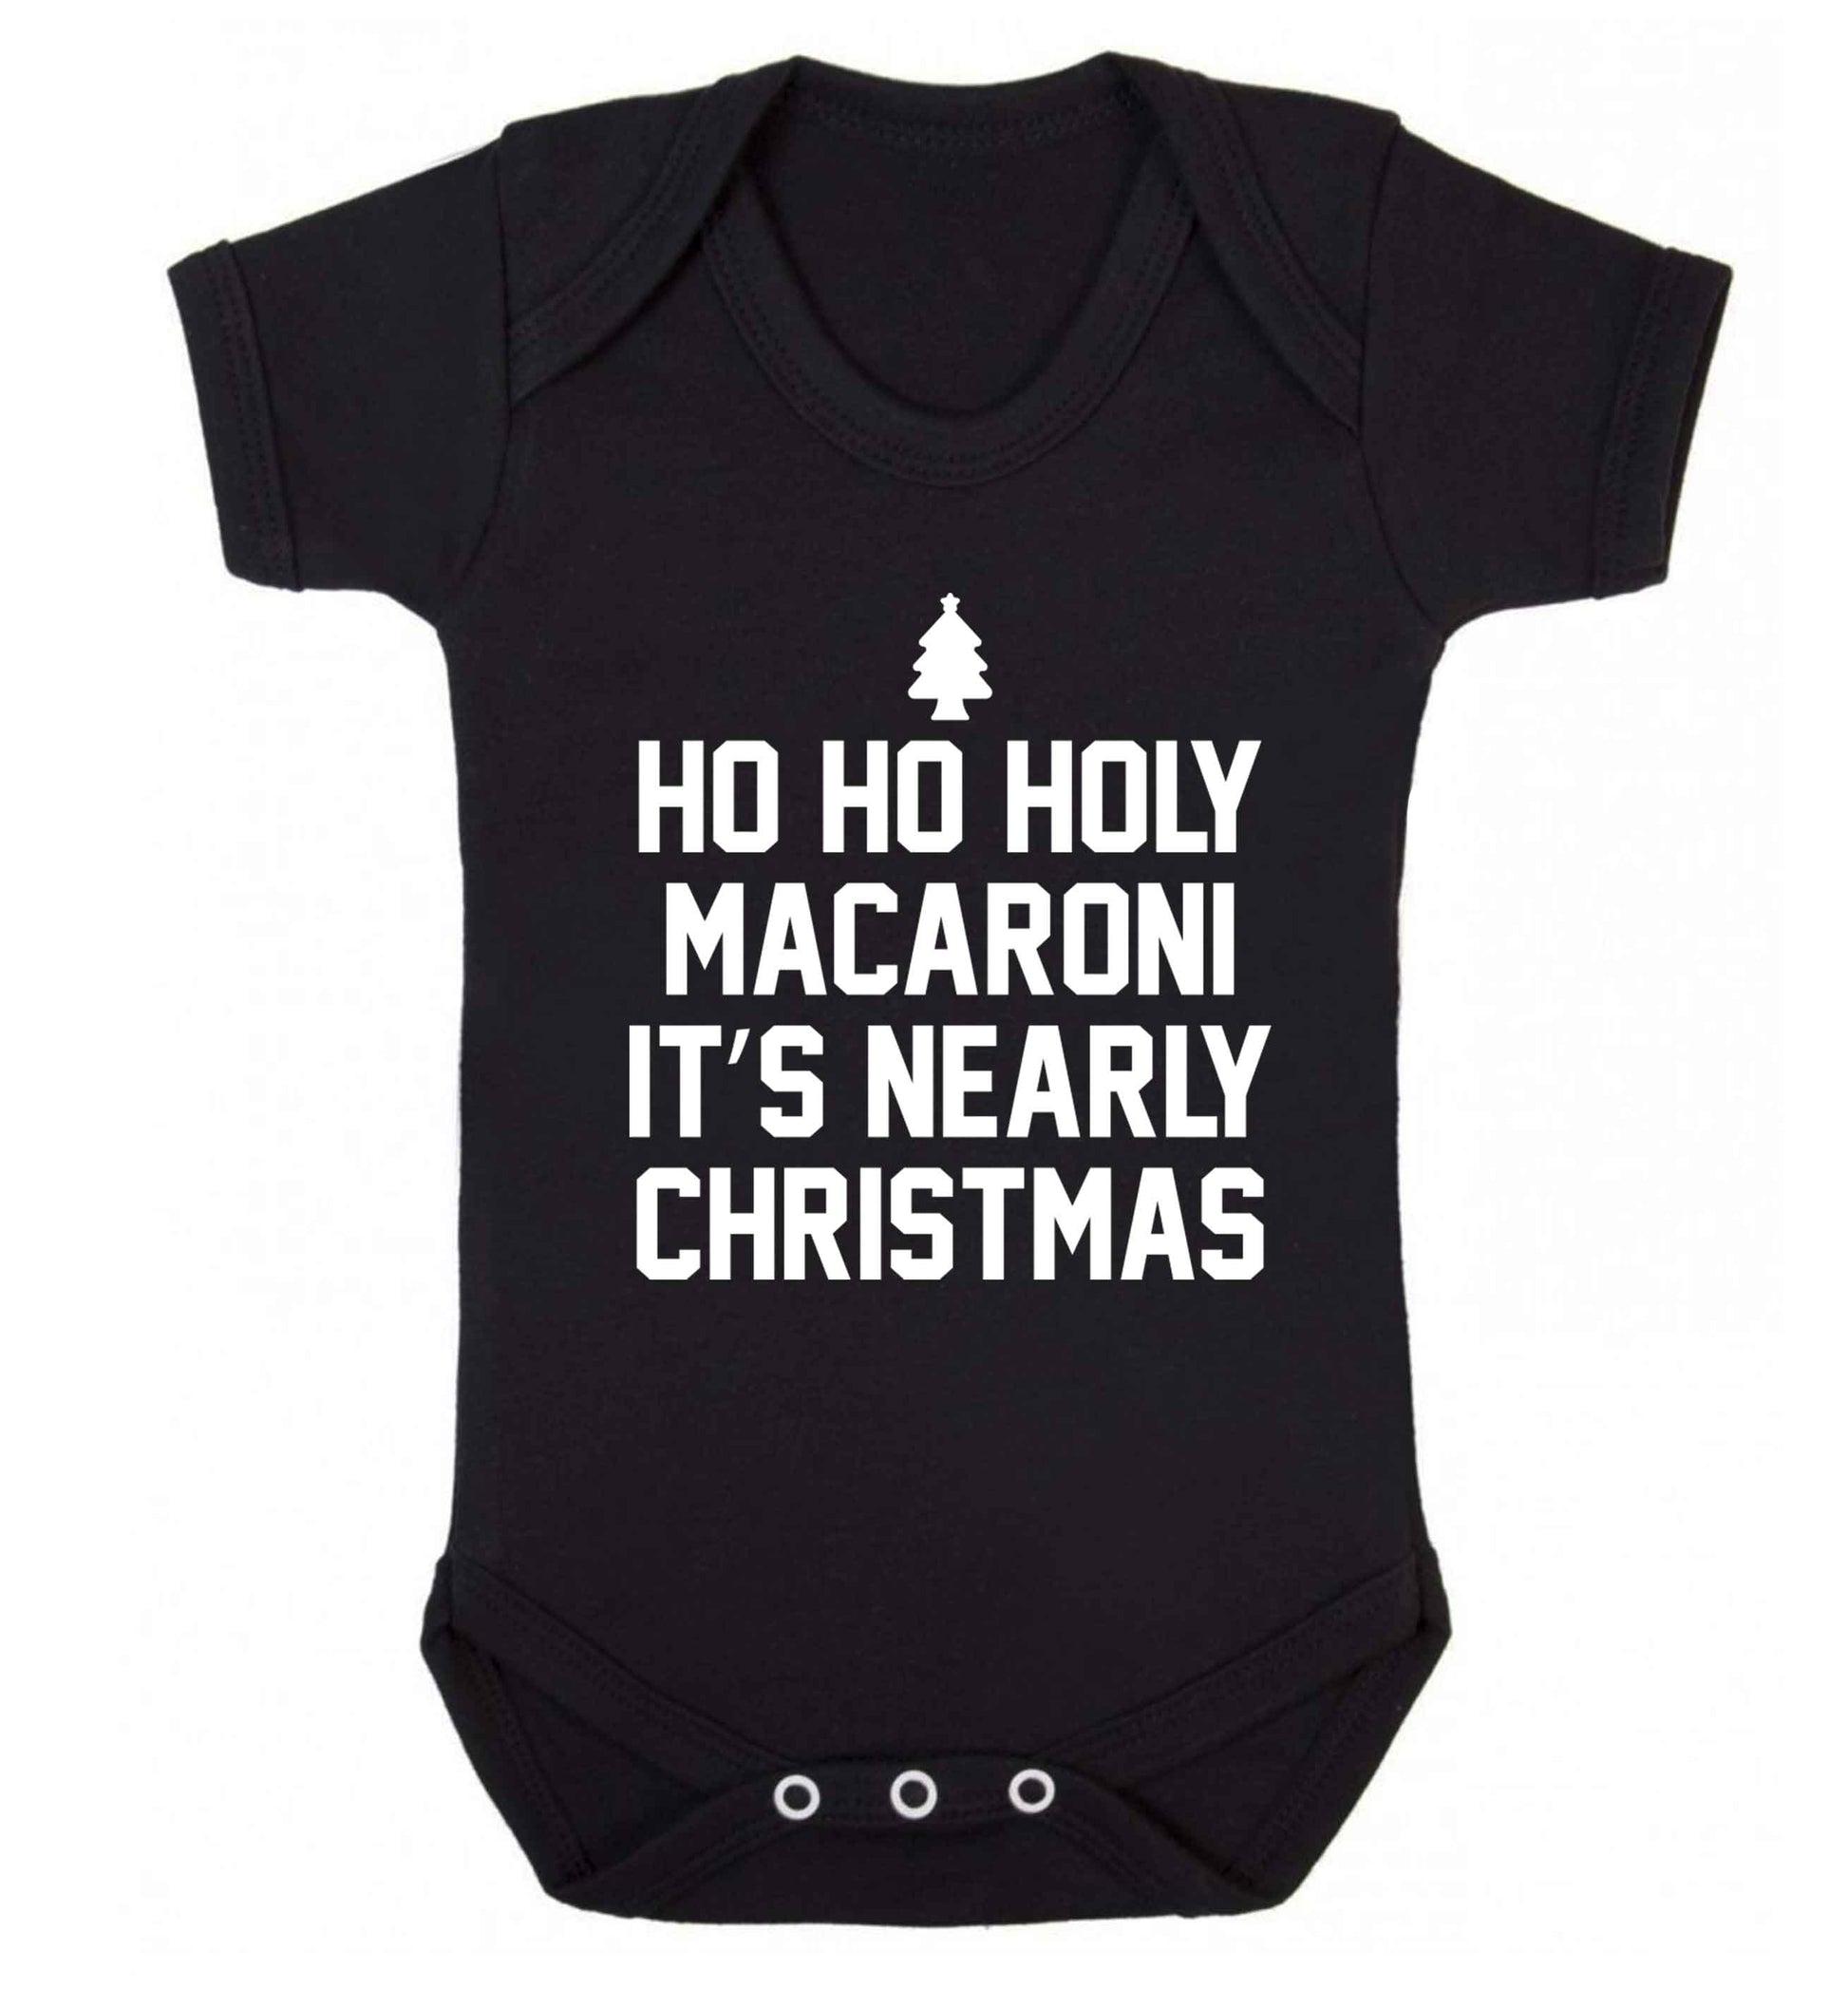 Ho ho holy macaroni it's nearly Christmas Baby Vest black 18-24 months